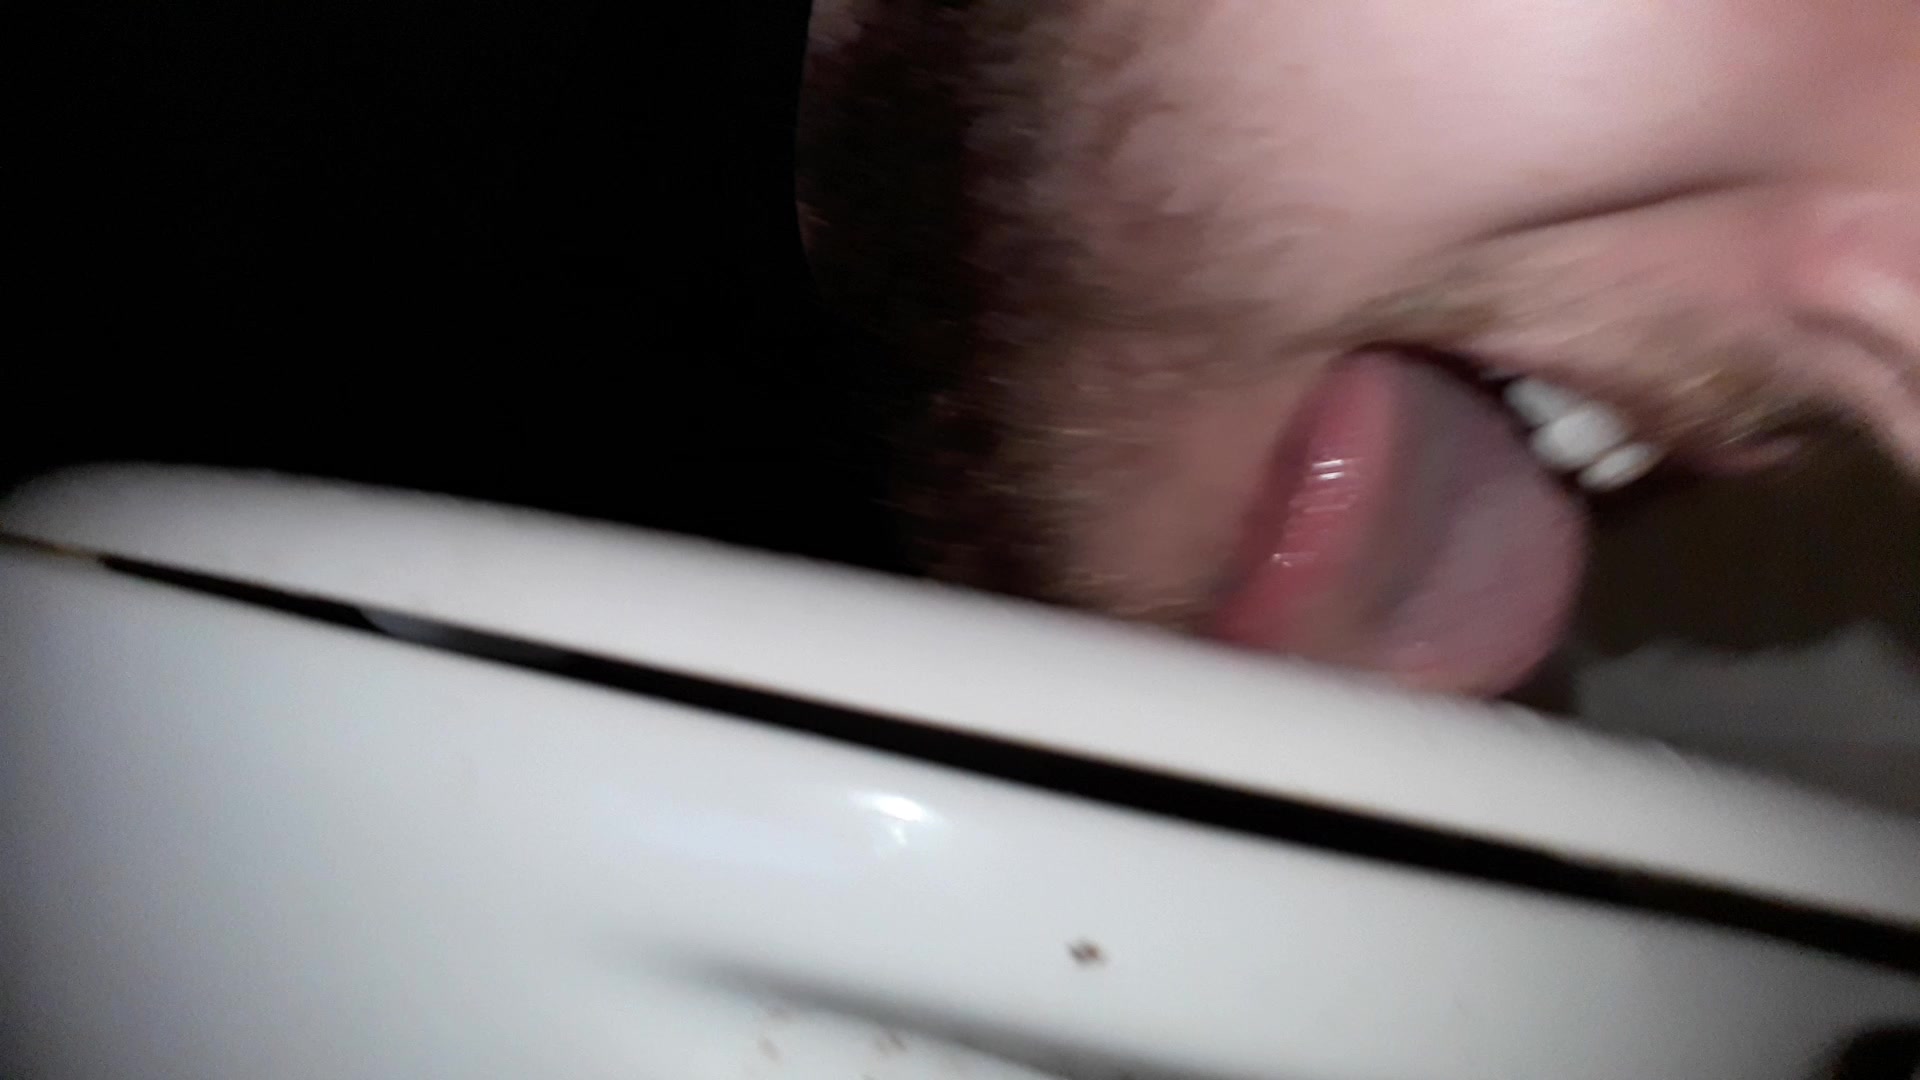 Licking toilet and sucking on brush